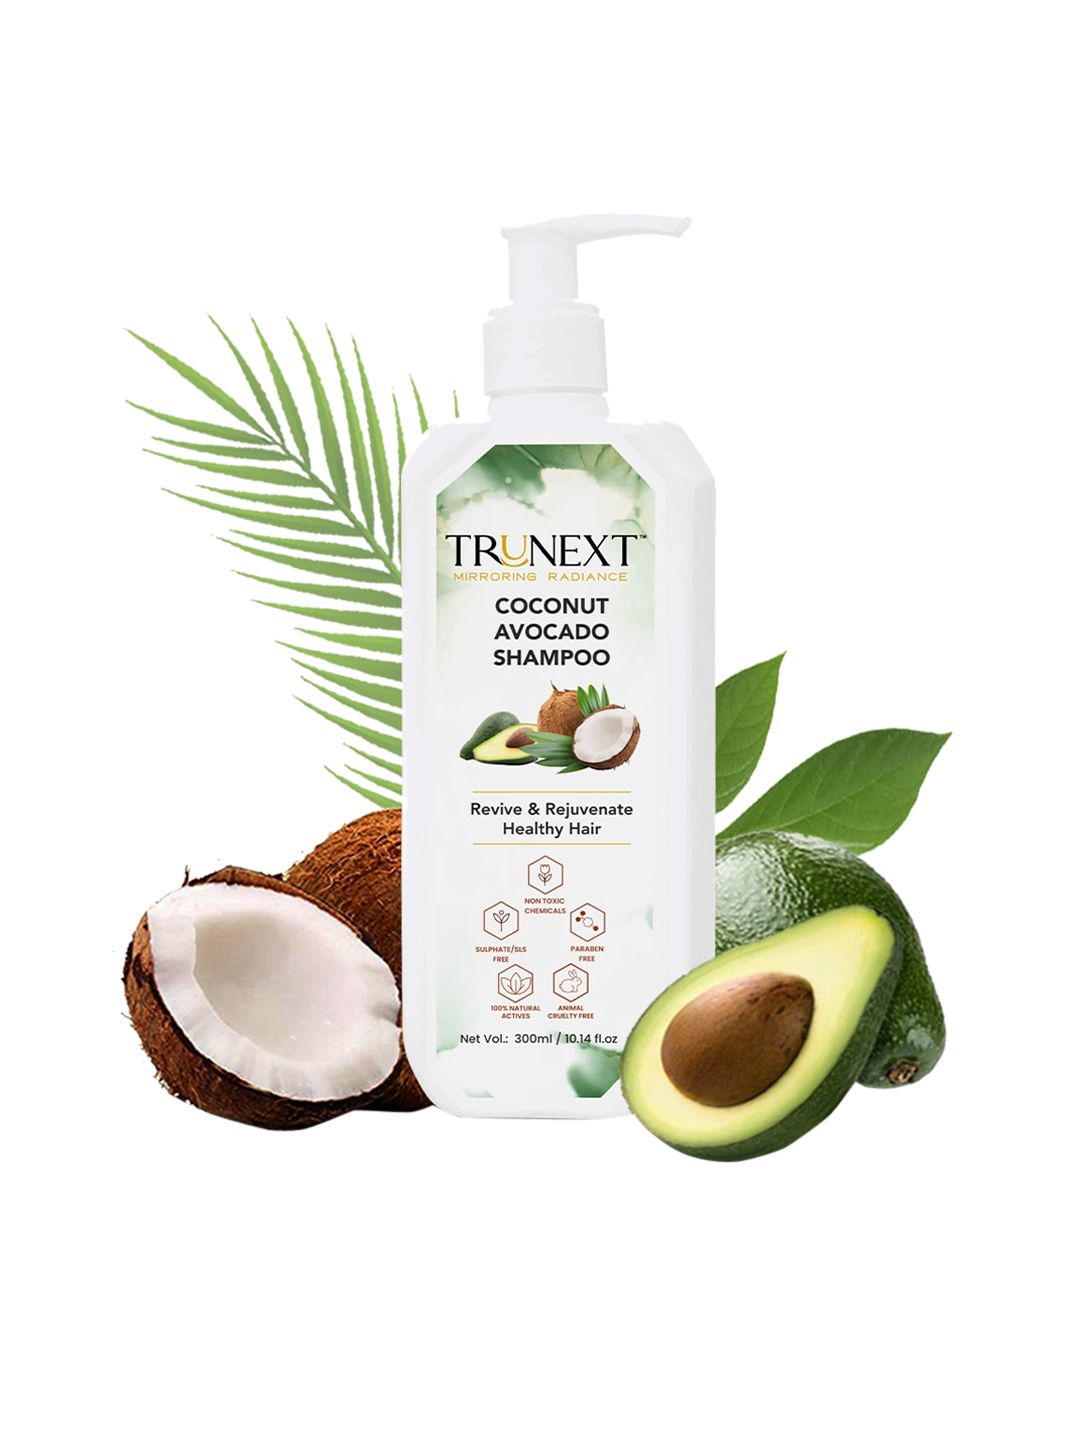 TRUNEXT Coconut Avocado Shampoo 300 ml Price in India